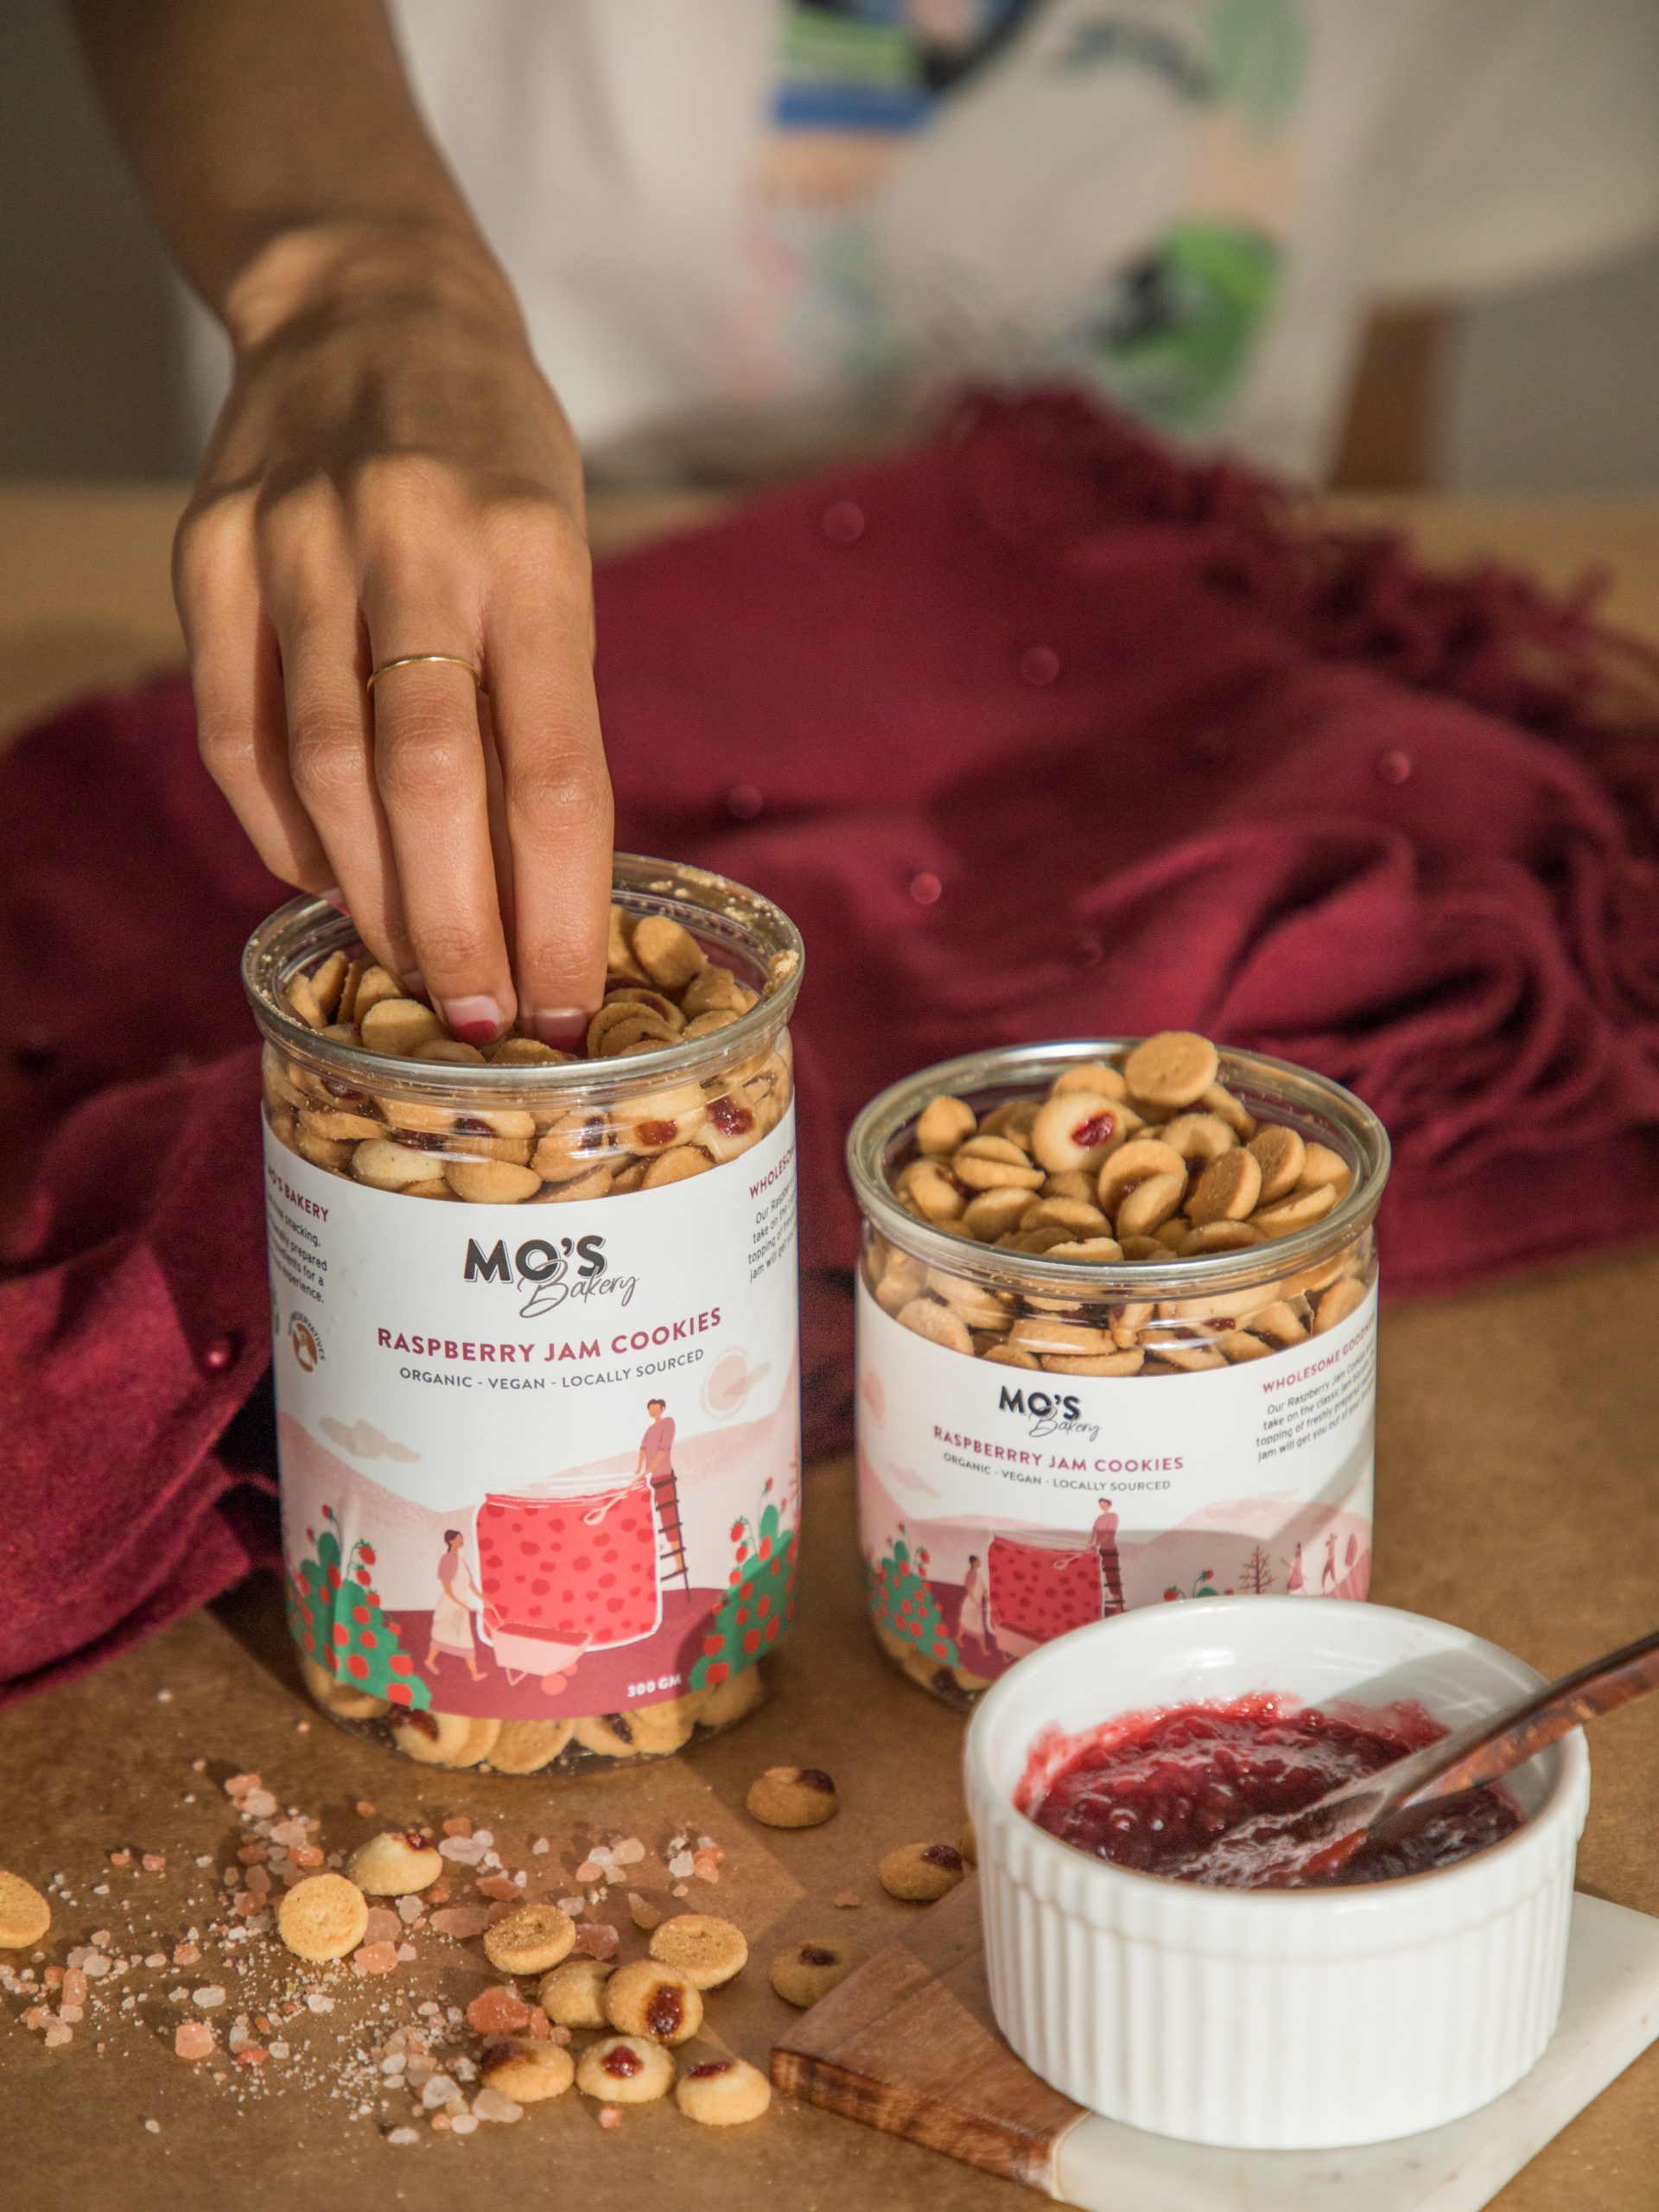 Product: Mo’s Bakery Raspberry Jam Cookies